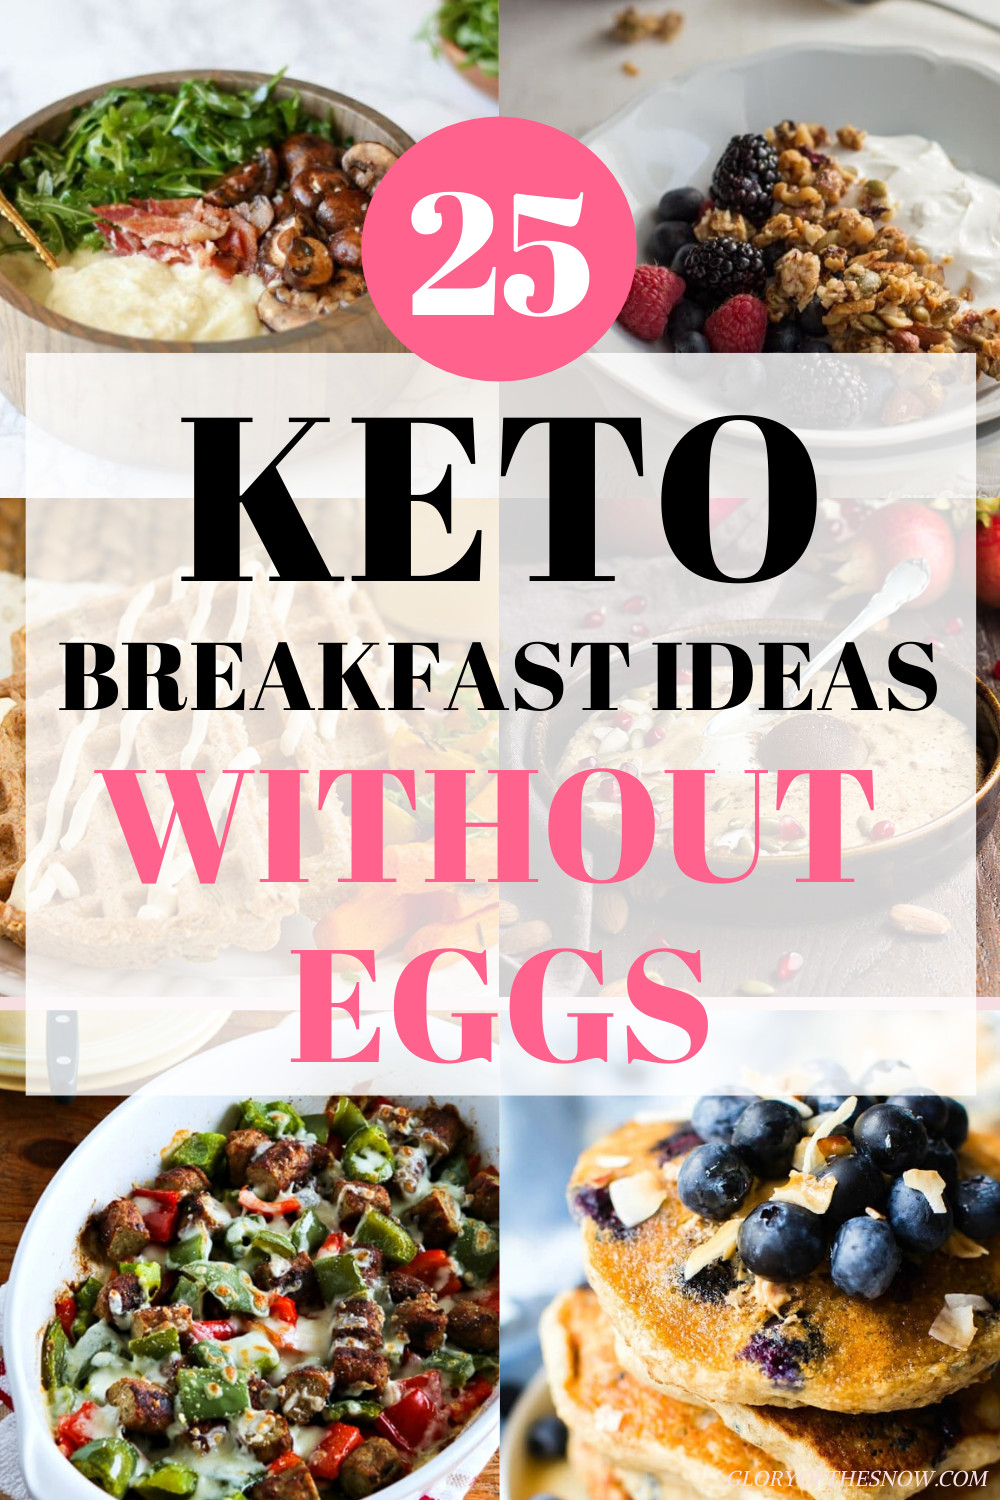 Keto Breakfast Recipes Easy No Eggs
 Keto Breakfast No Eggs 25 Delicious Recipes You Will Love